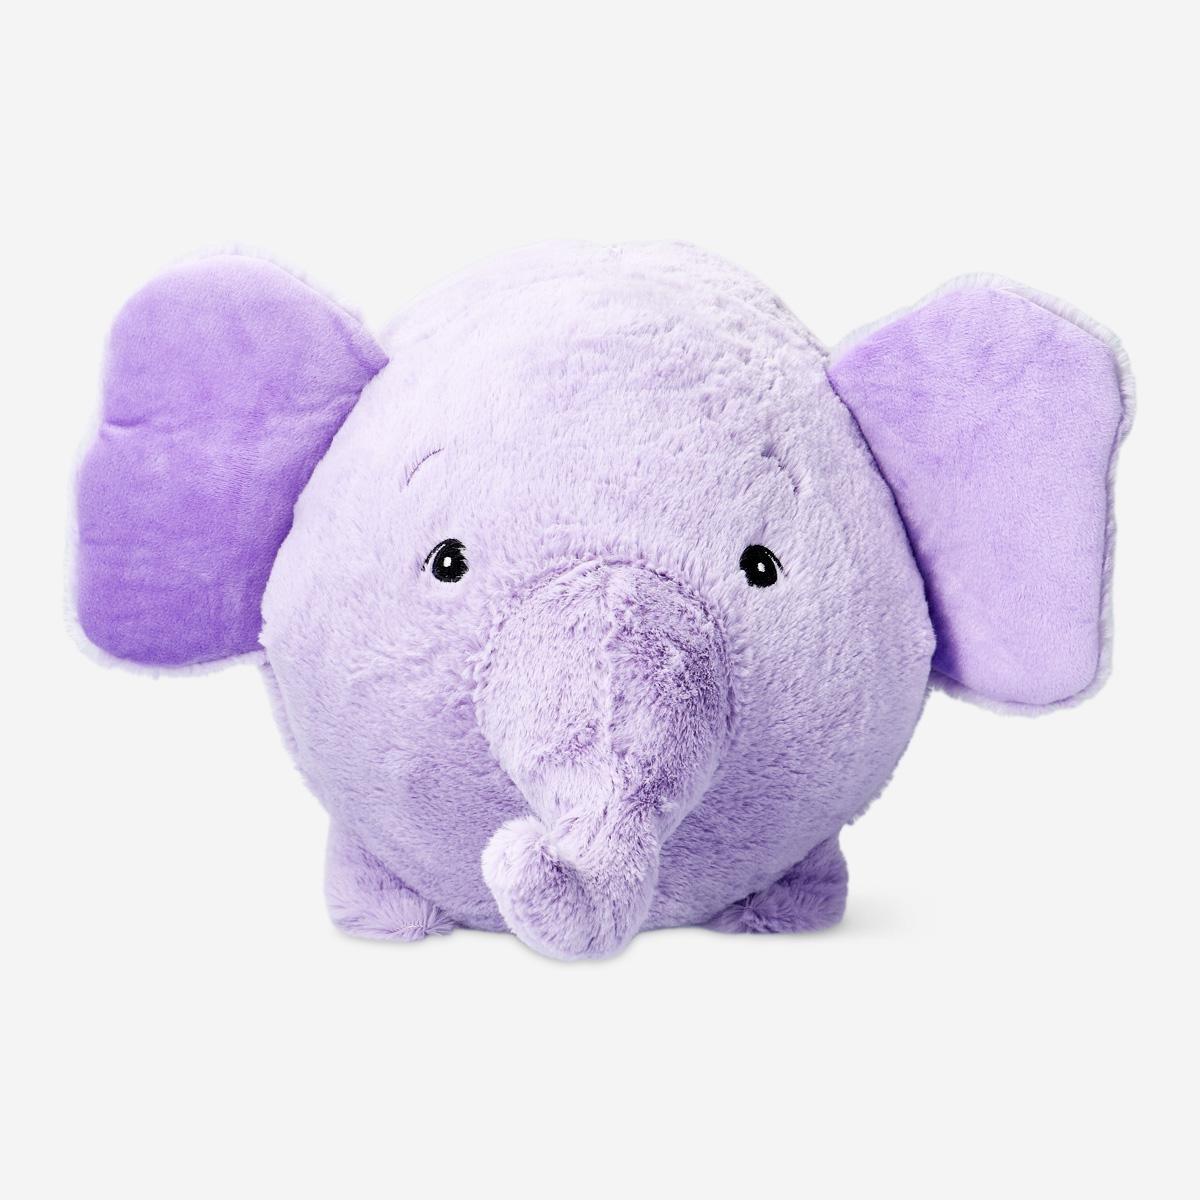 Purple elephant soft toy